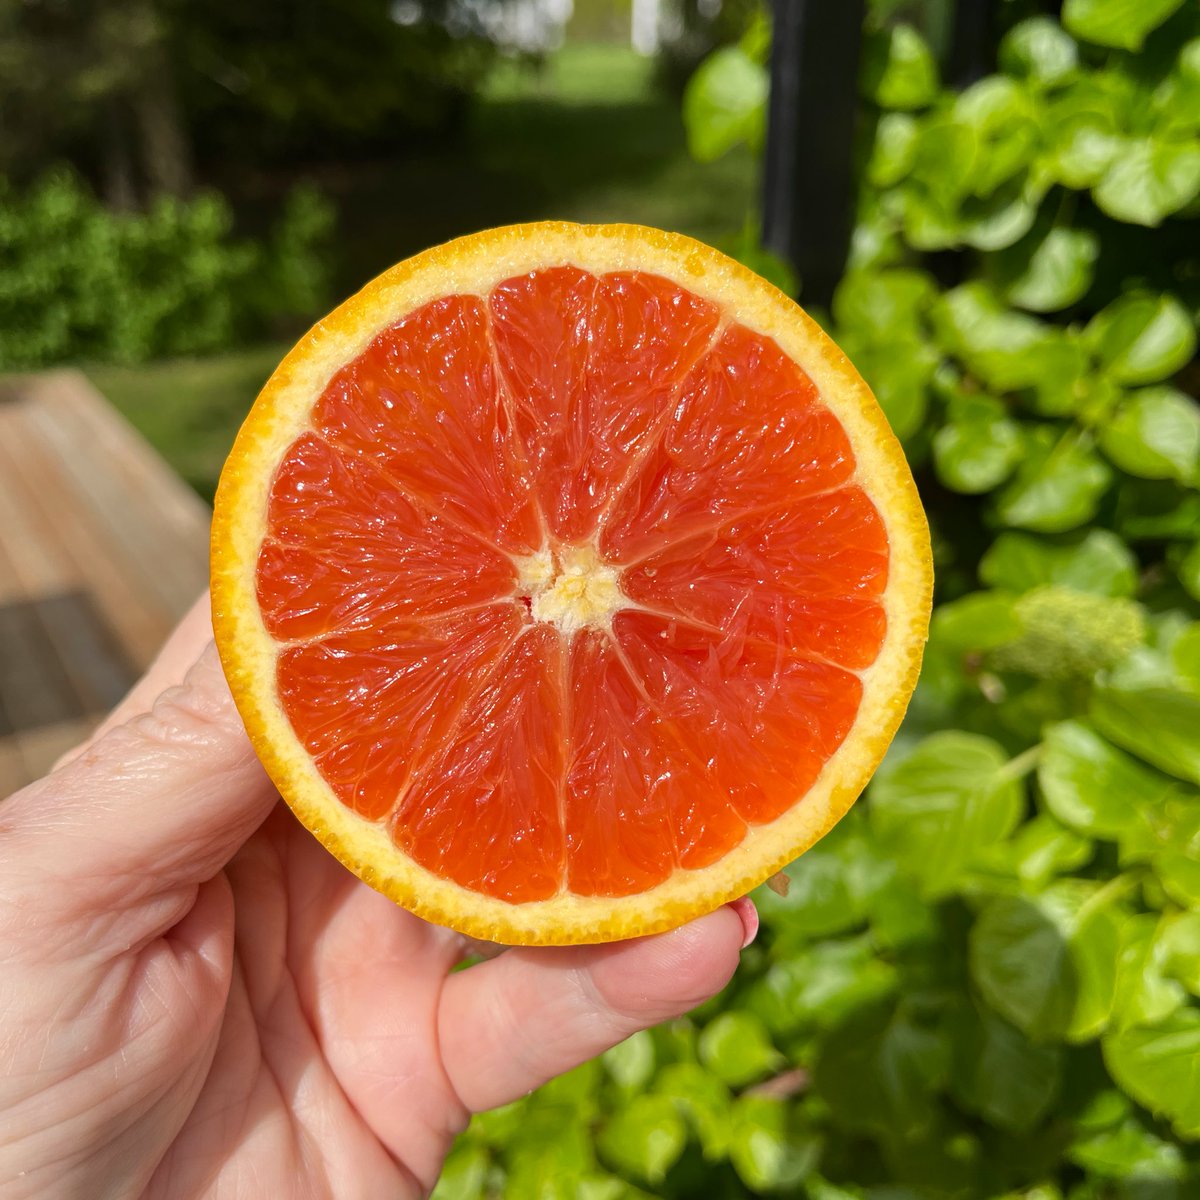 It’s no SURPRISE that #orioles love oranges! 😋 #feedthebirds 🧡